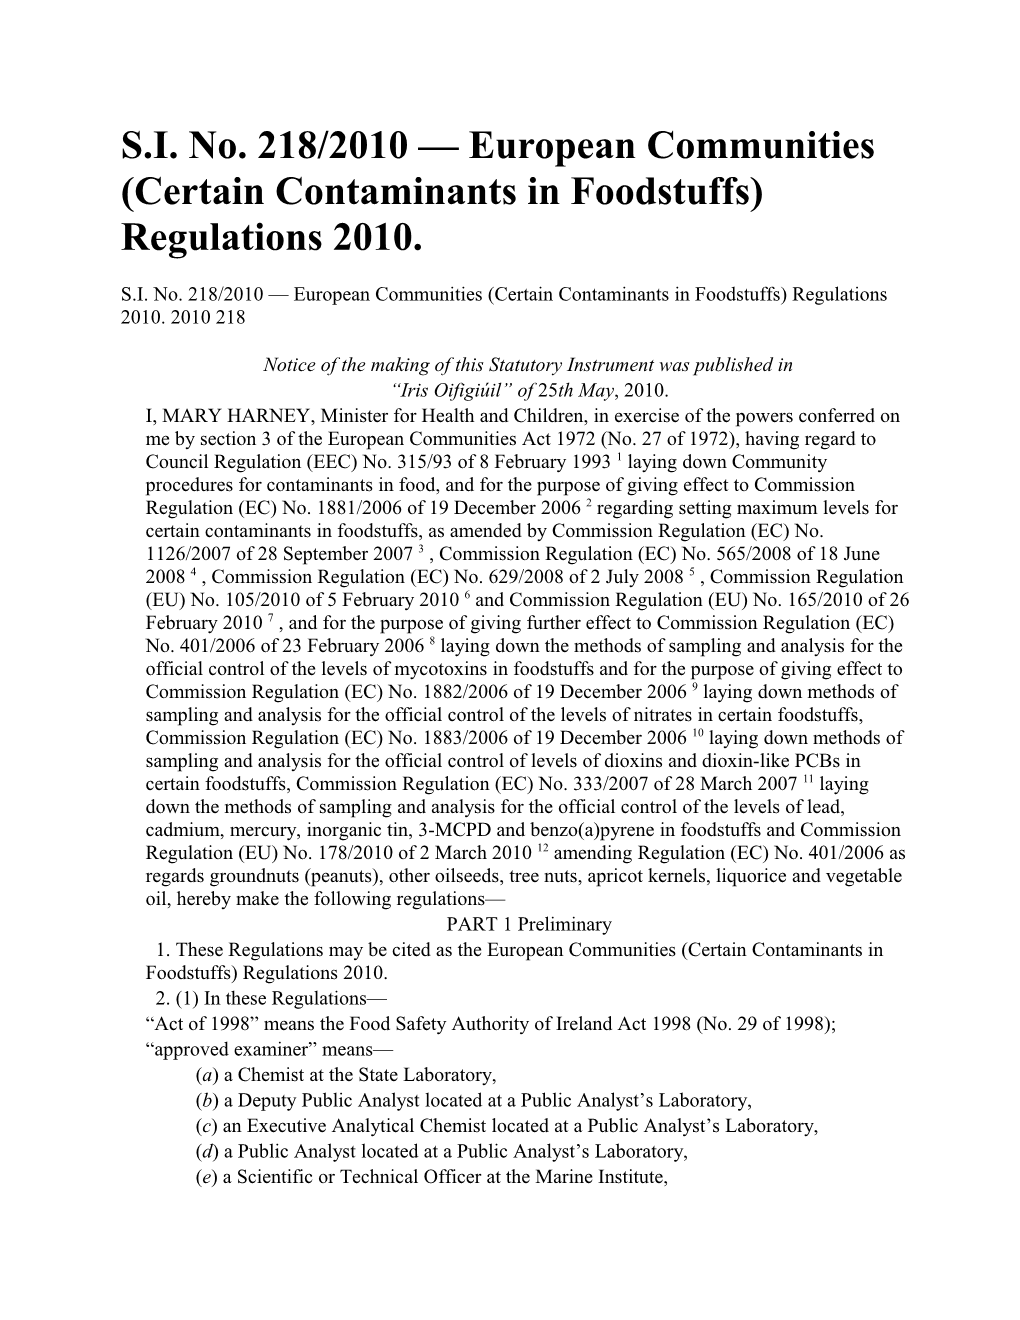 S.I. No. 218/2010 European Communities (Certain Contaminants in Foodstuffs) Regulations 2010